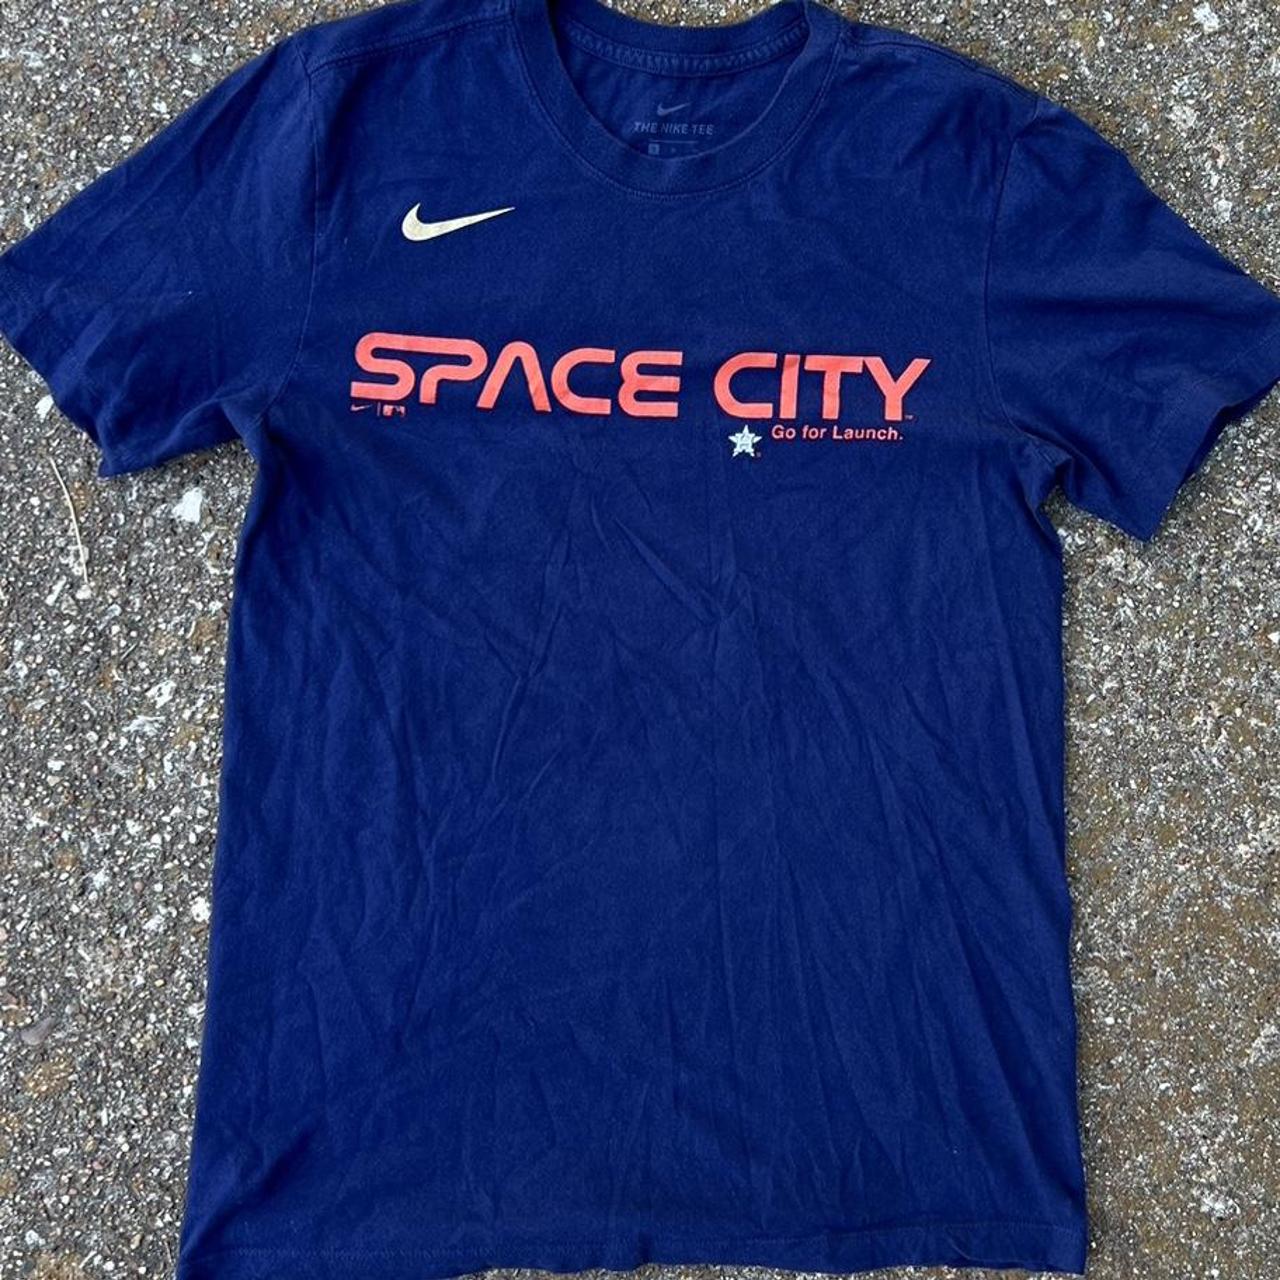 Men's Nike Navy Houston Astros City Connect Logo T-Shirt